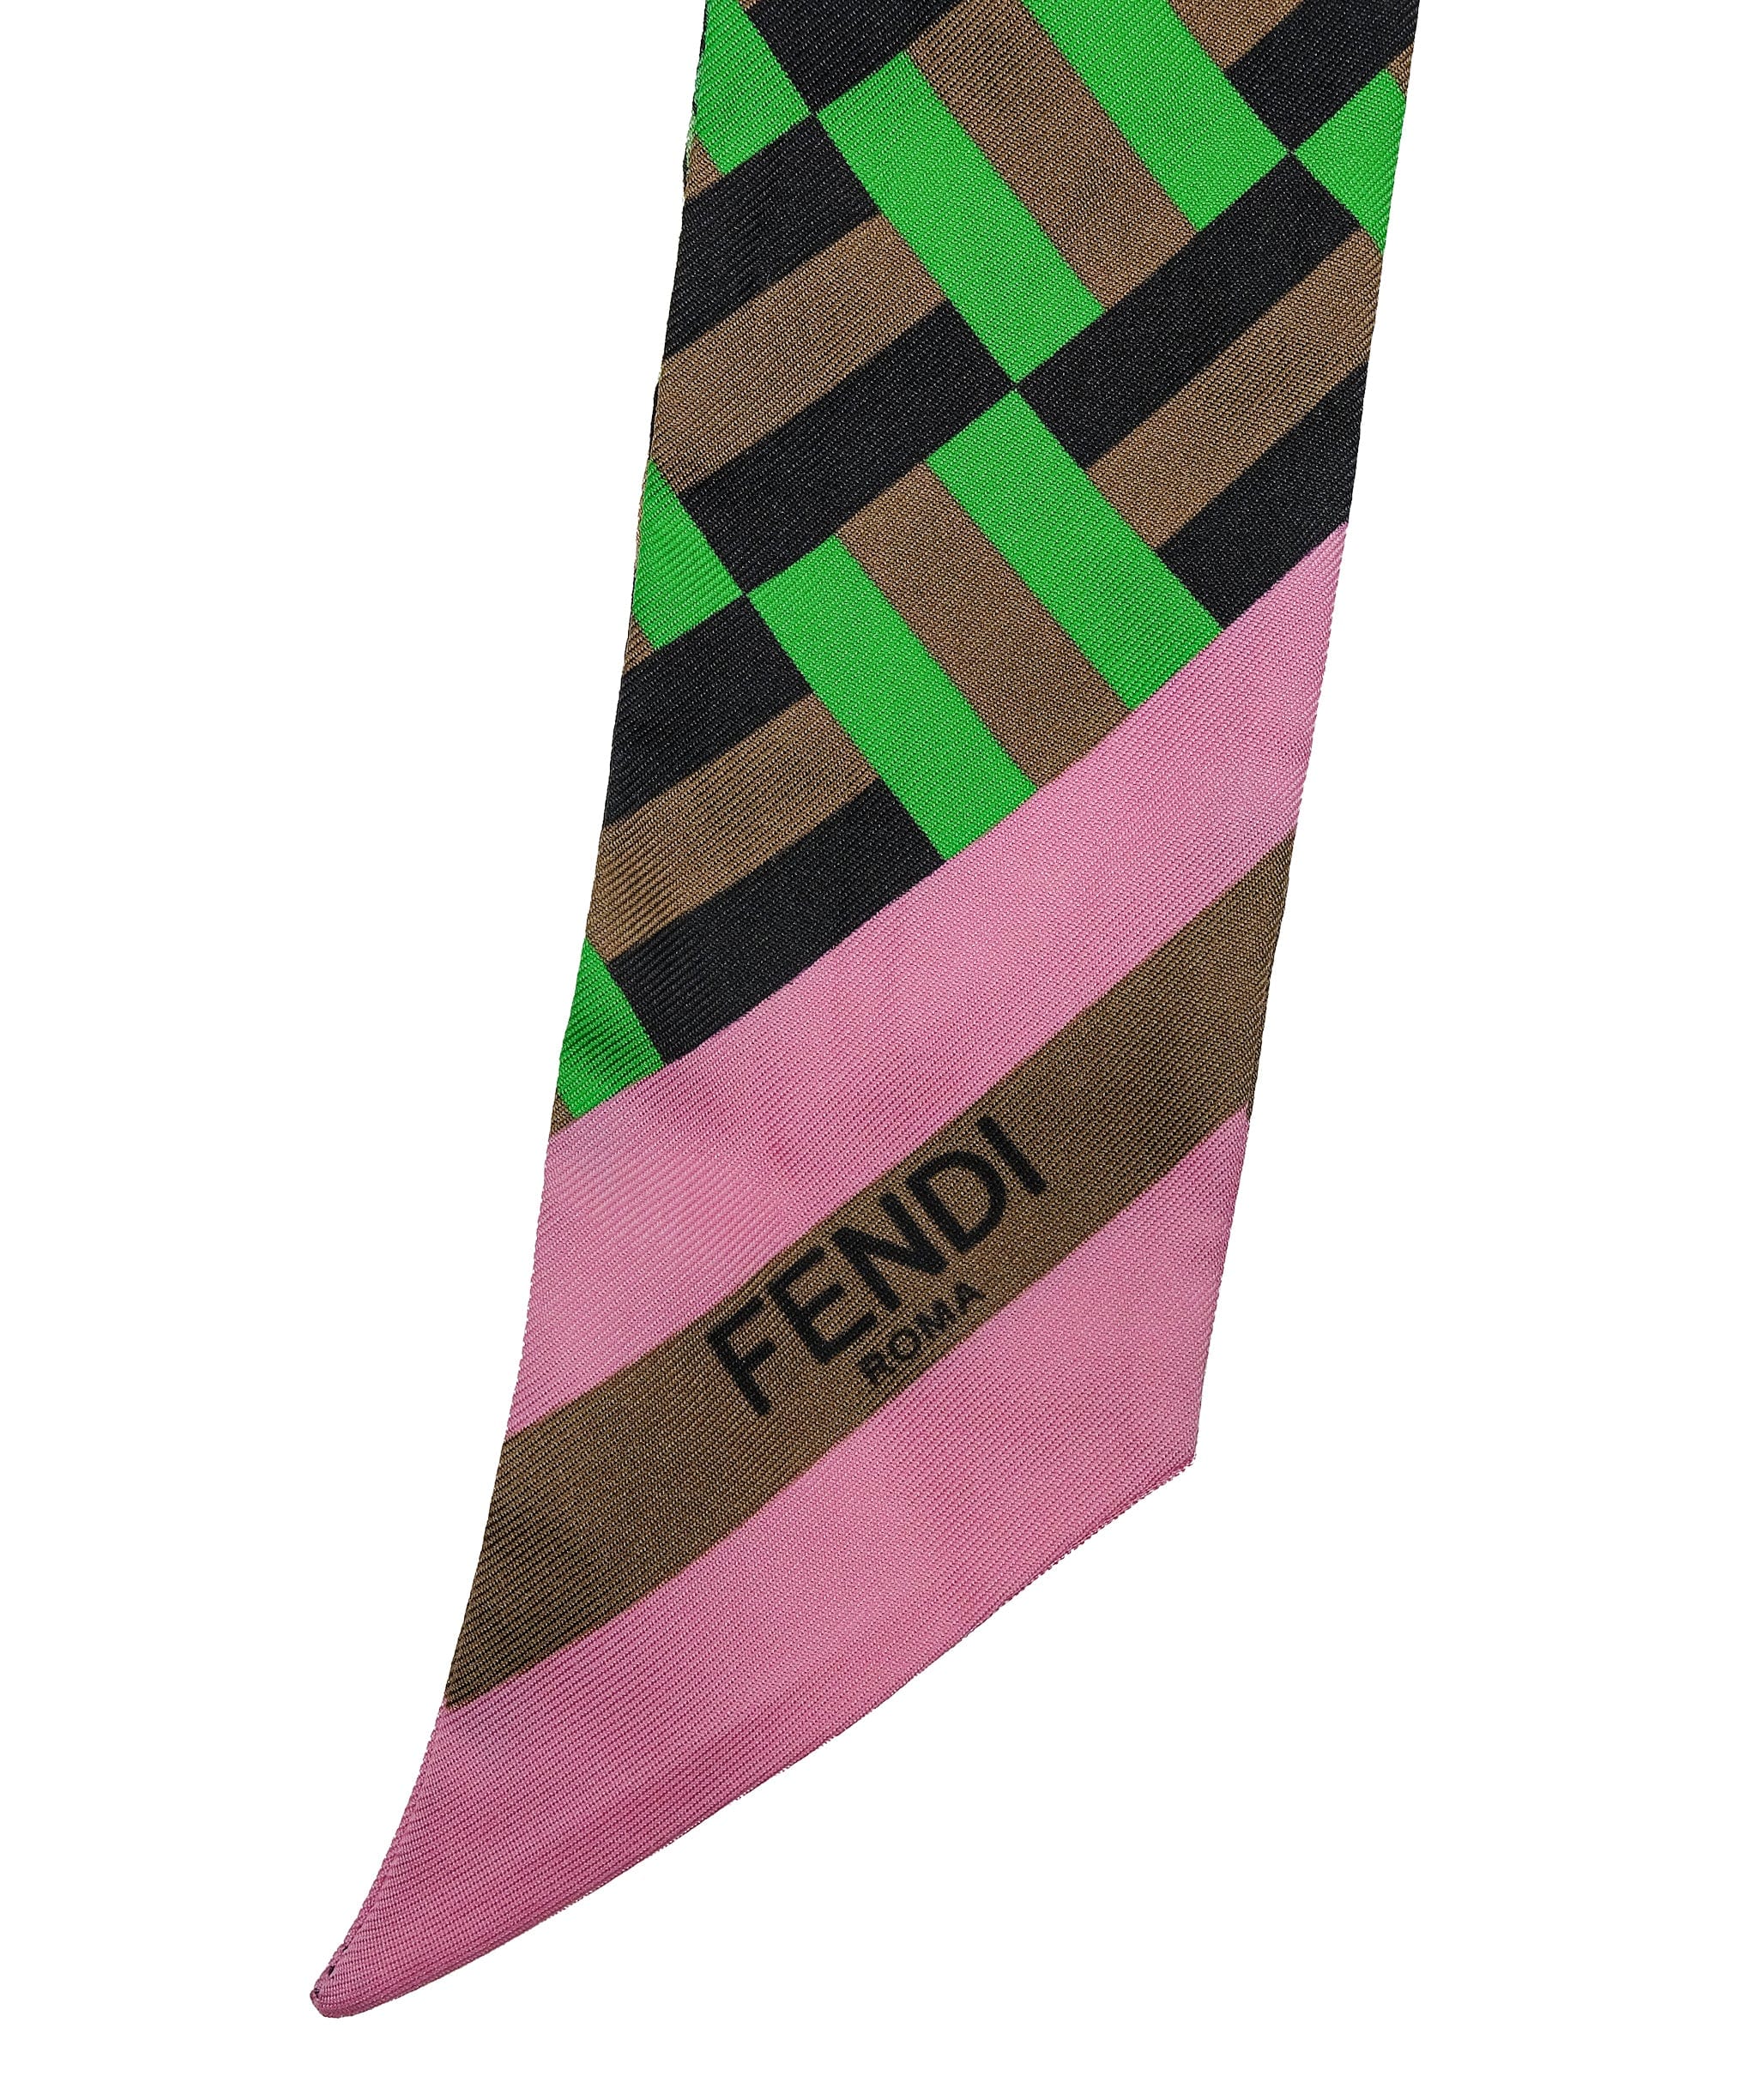 Fendi Fendi Twilly Green Pink Printed RJC3262